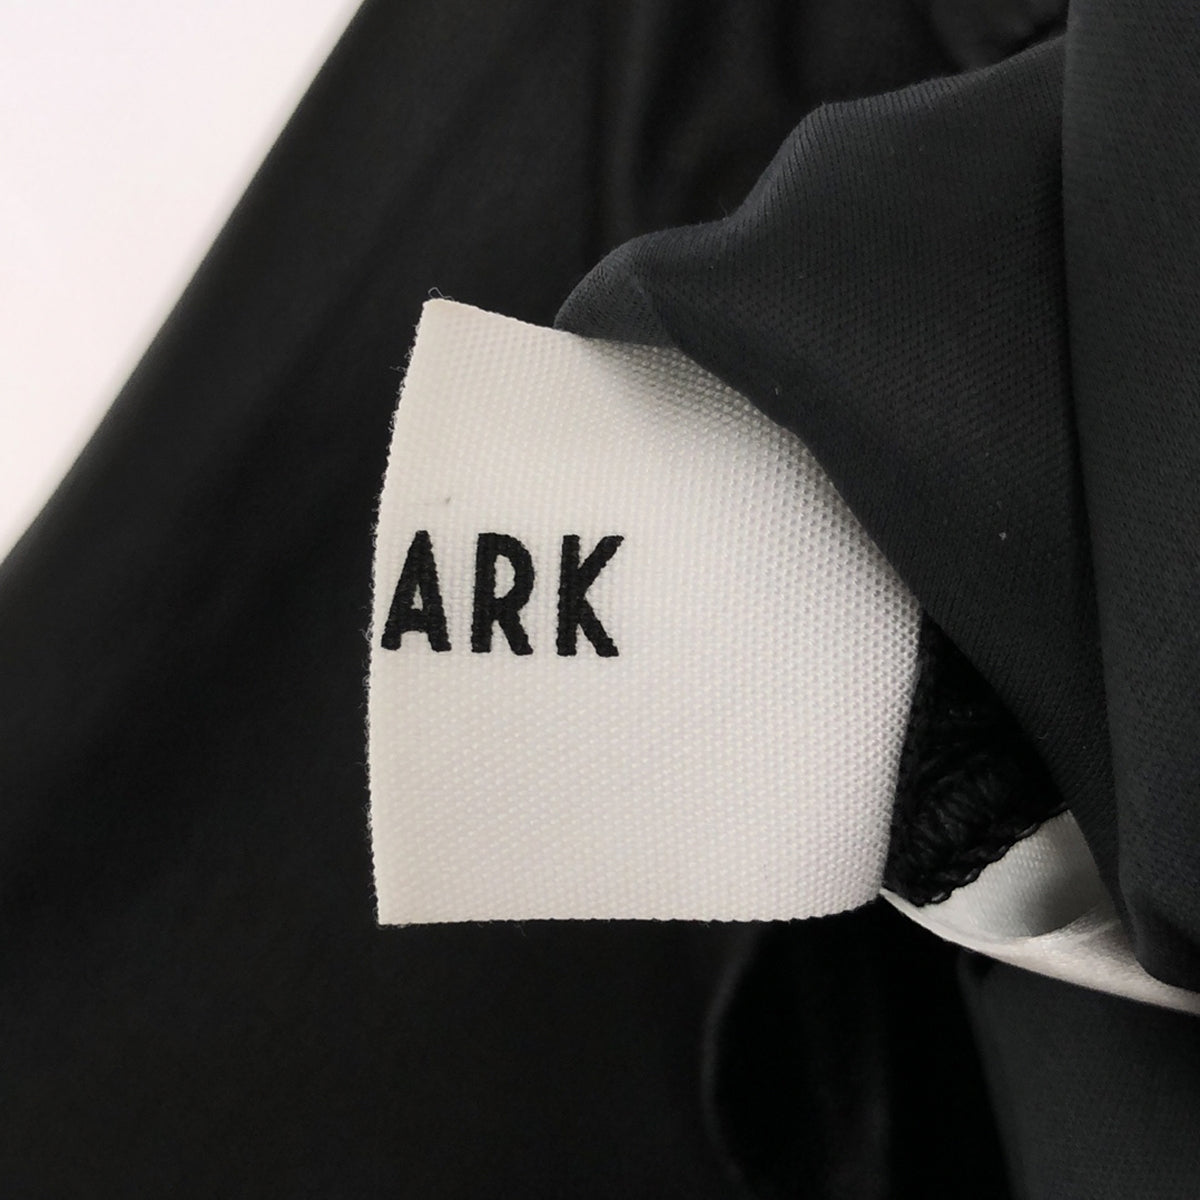 RIM.ARK / リムアーク | フェイクレザーパンツ | 36 | ブラック | レディース